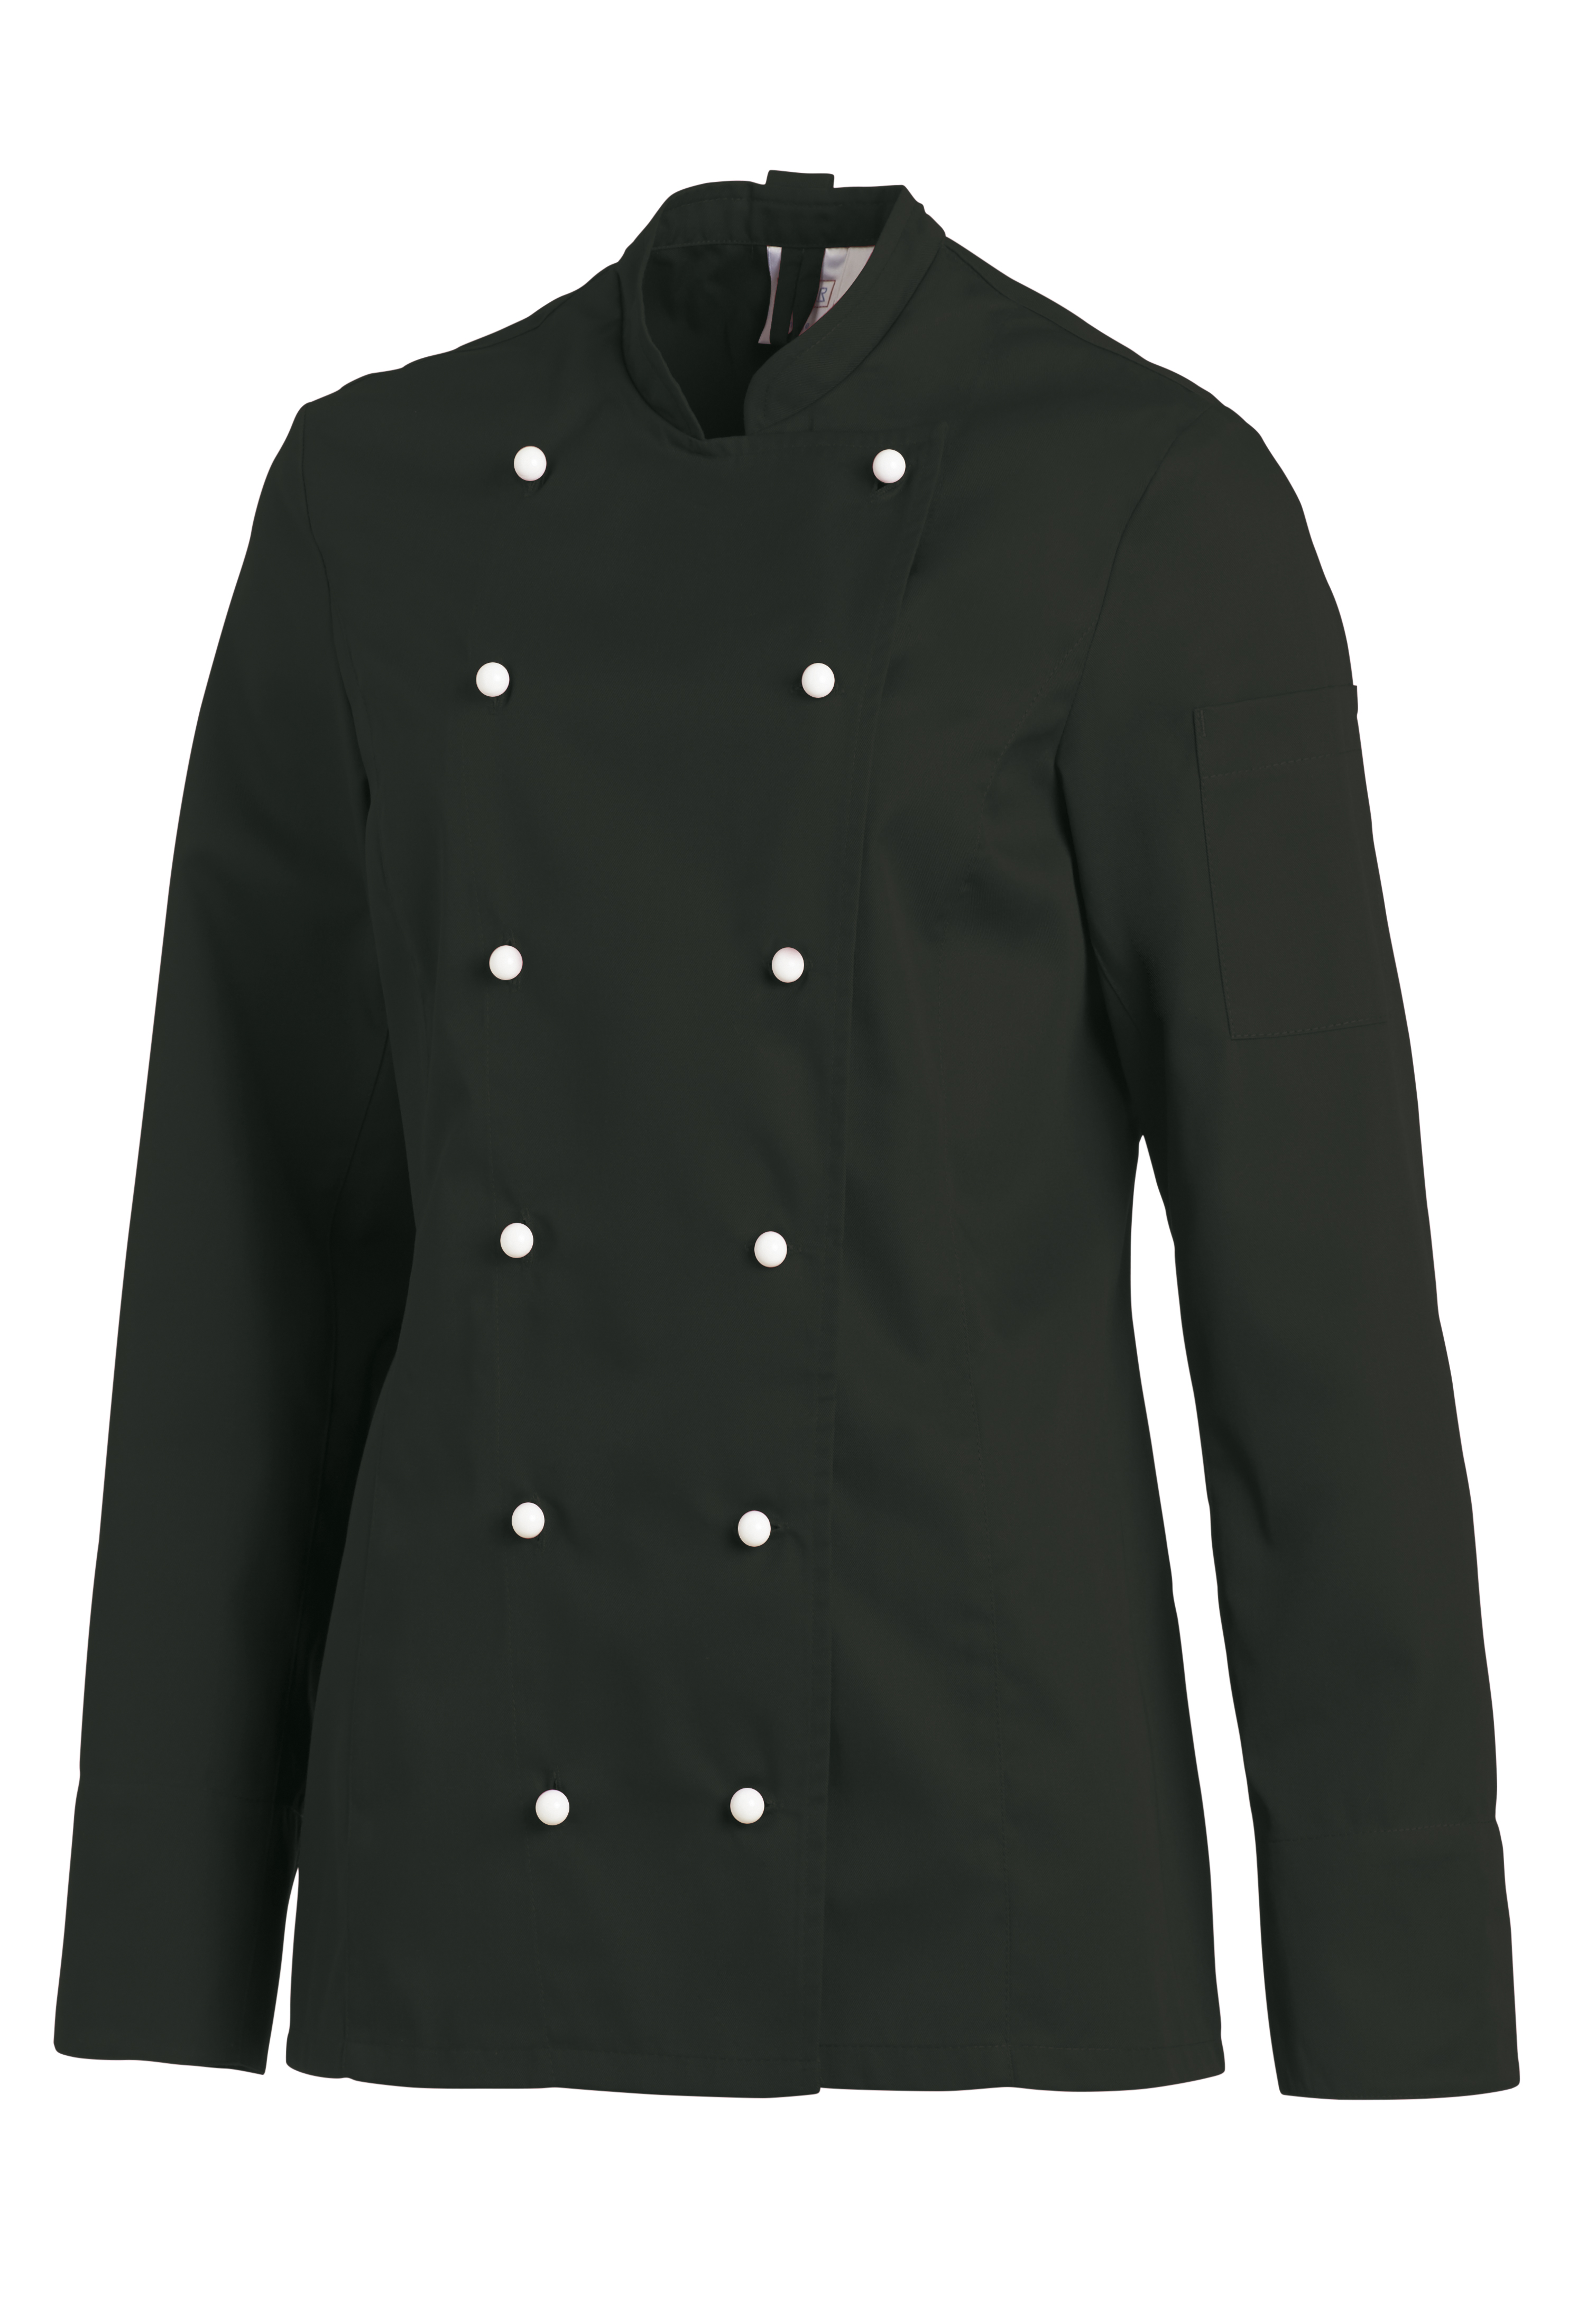 Damen-Kochjacke, langarm, Farbe schwarz, Größe 48